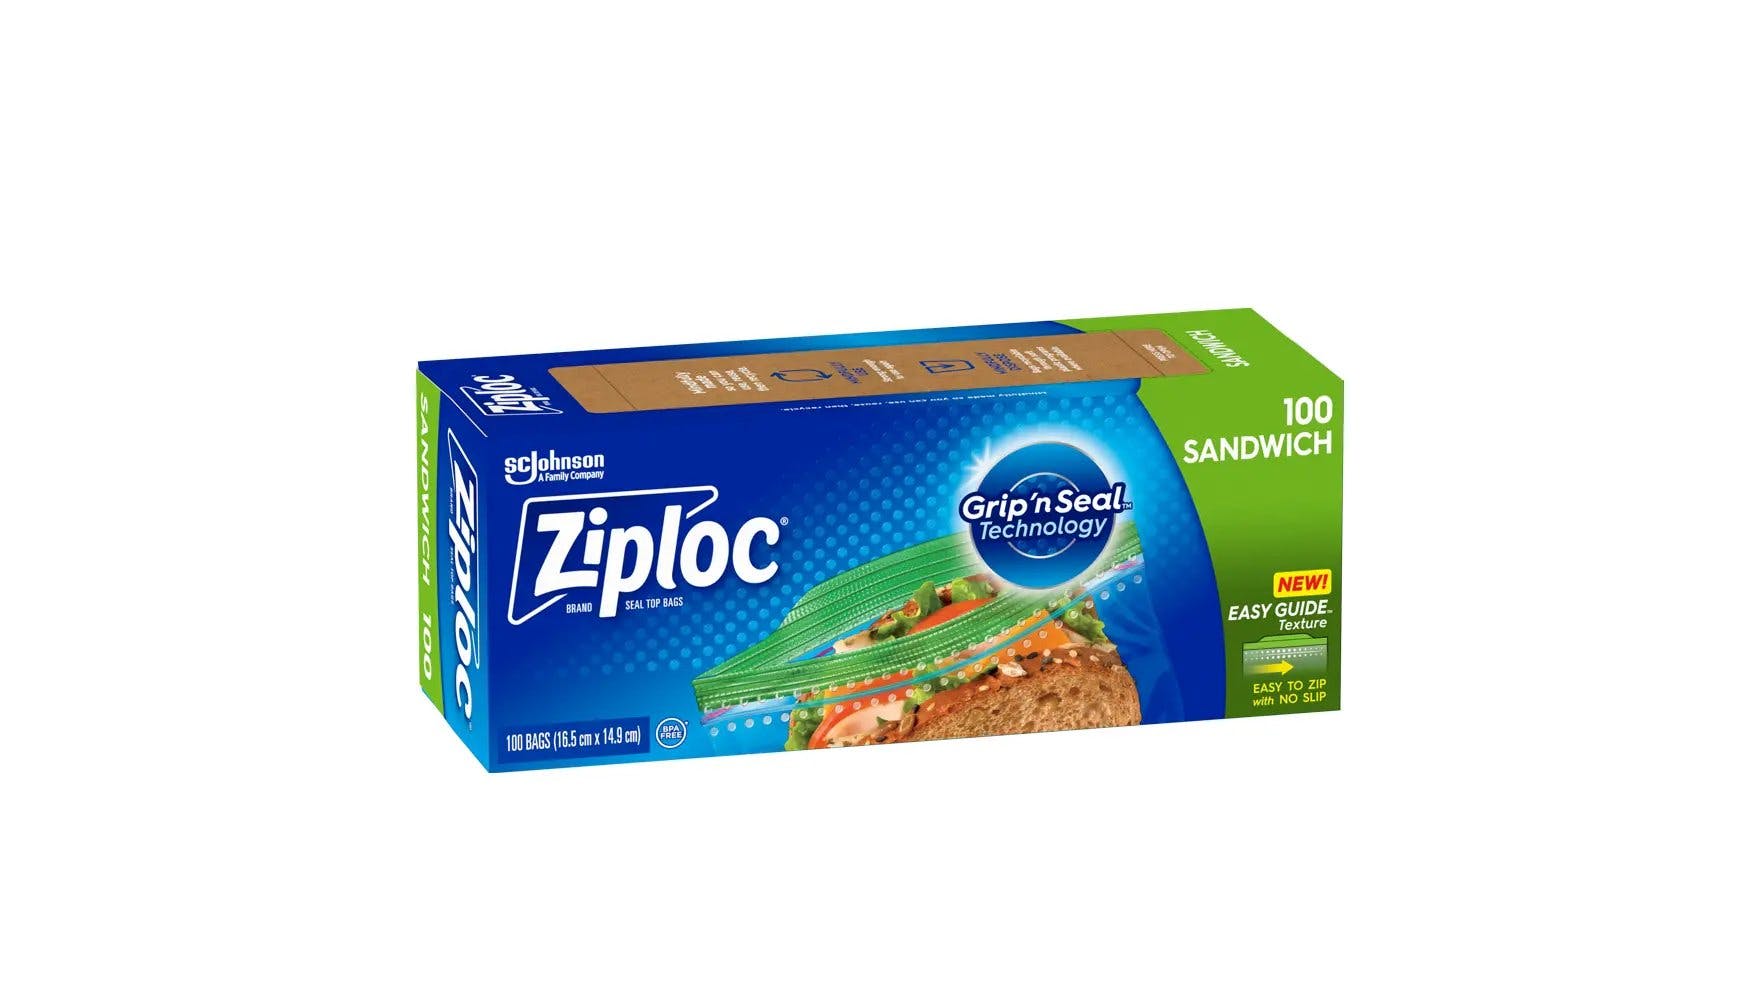 Angle of Ziploc sandwich bag box.